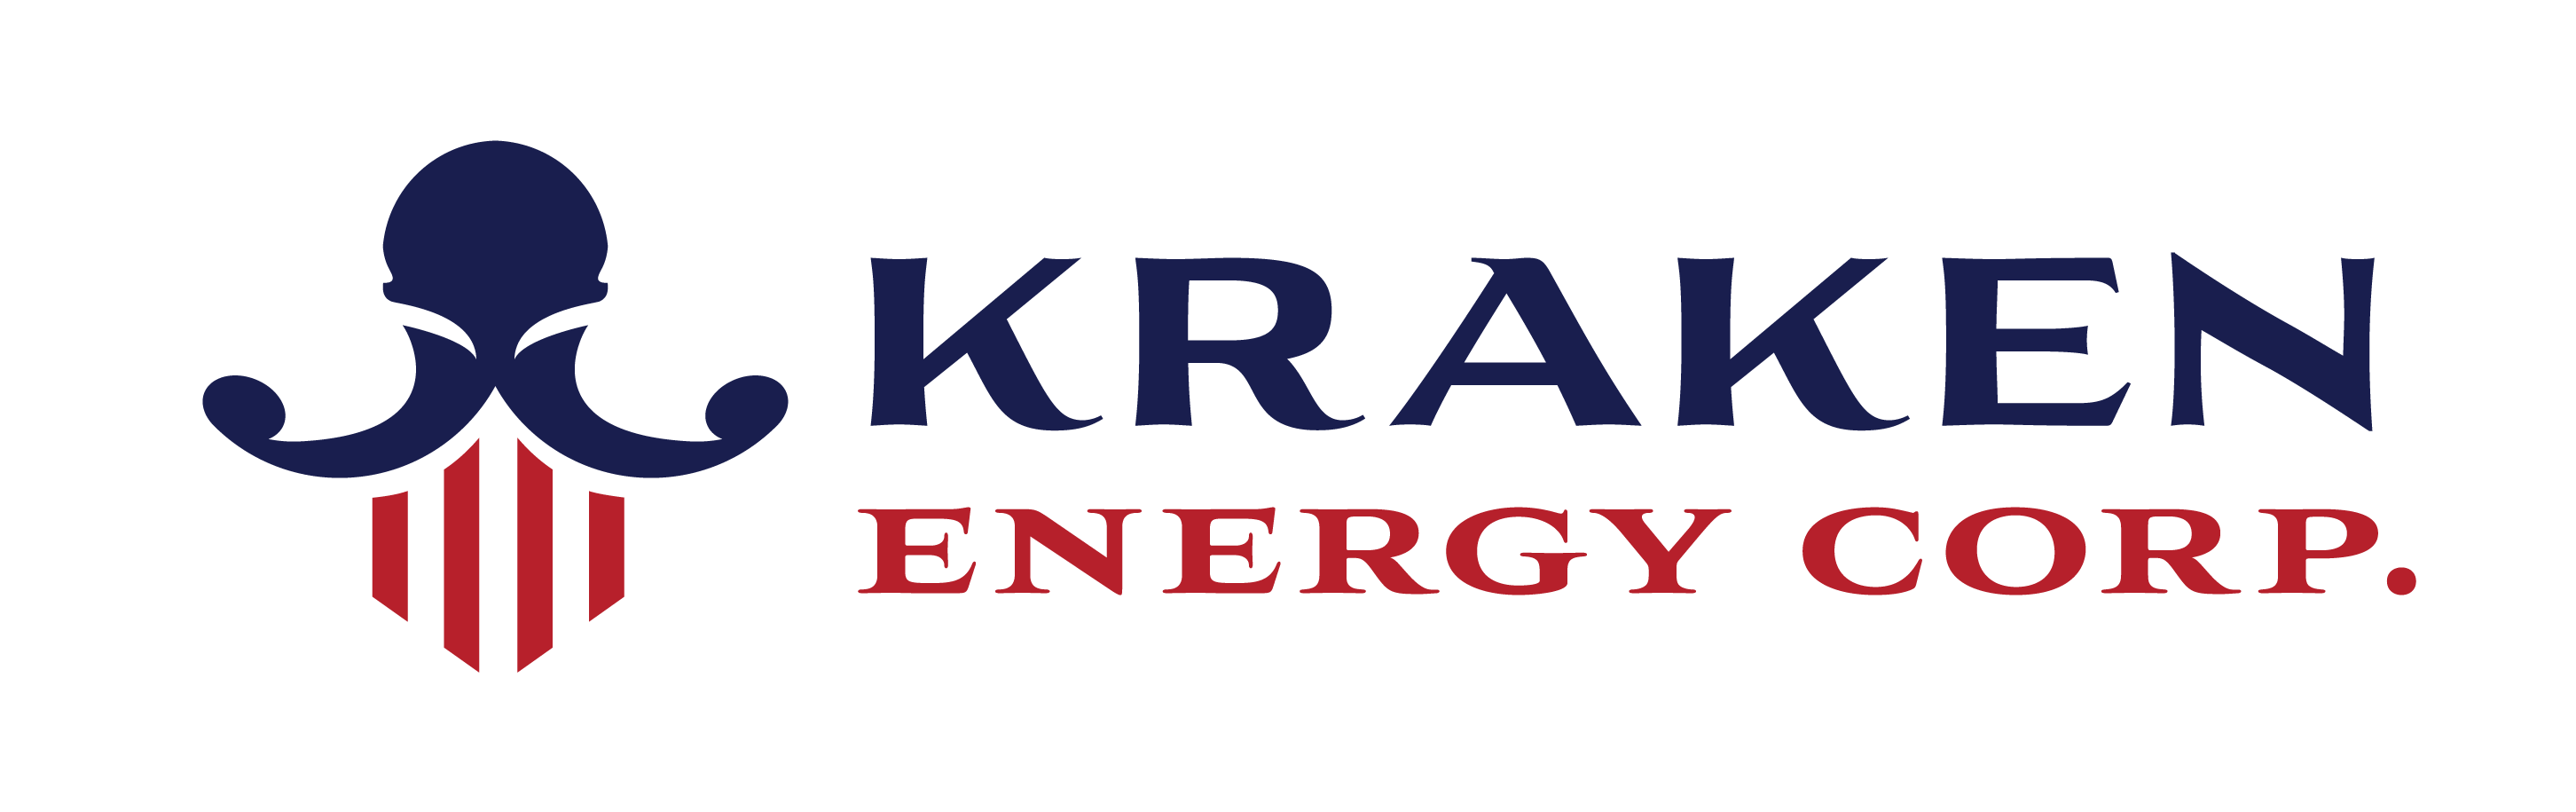 Kraken Energy Corp.